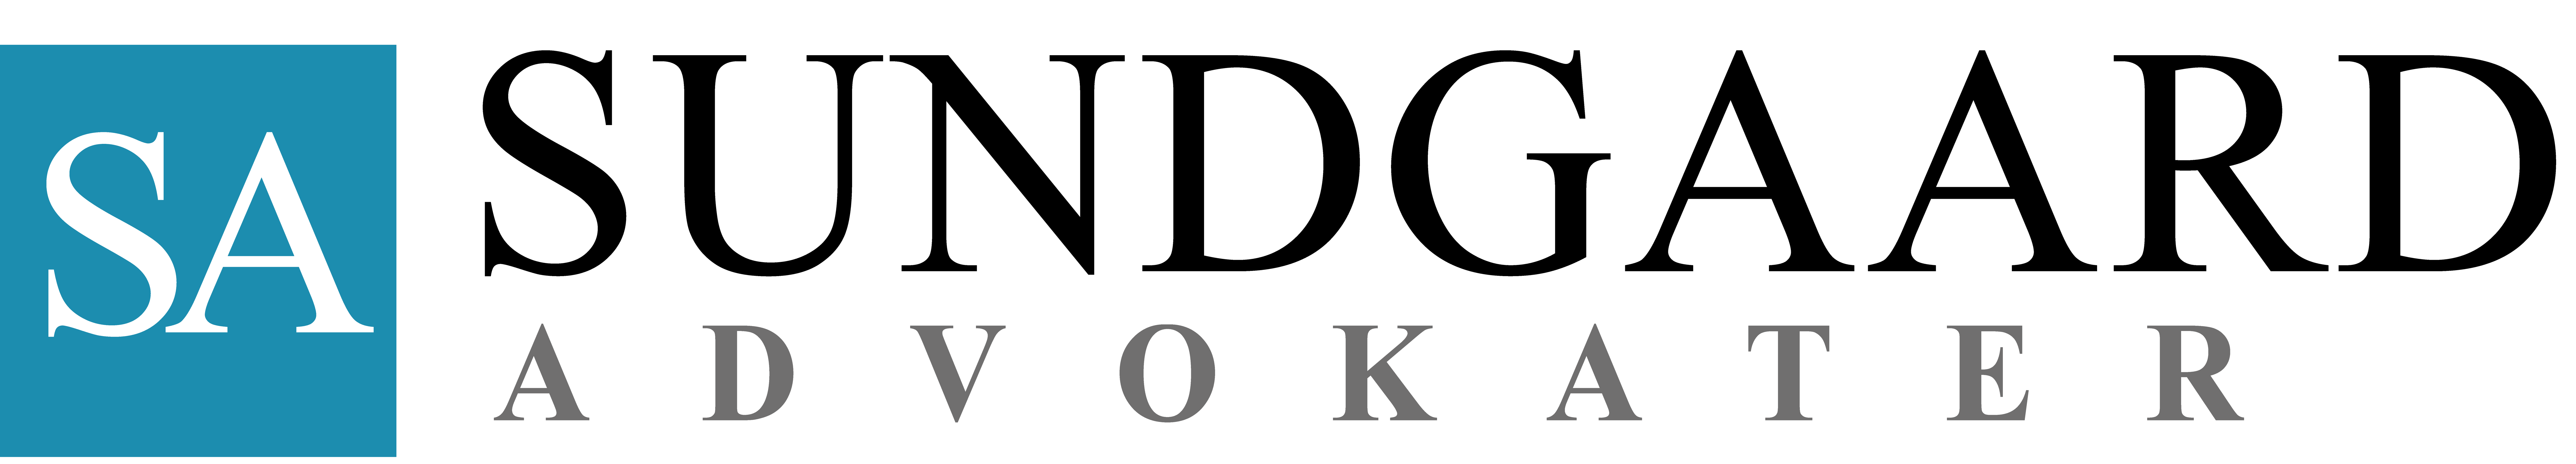 Sundgaard Advokater company logo